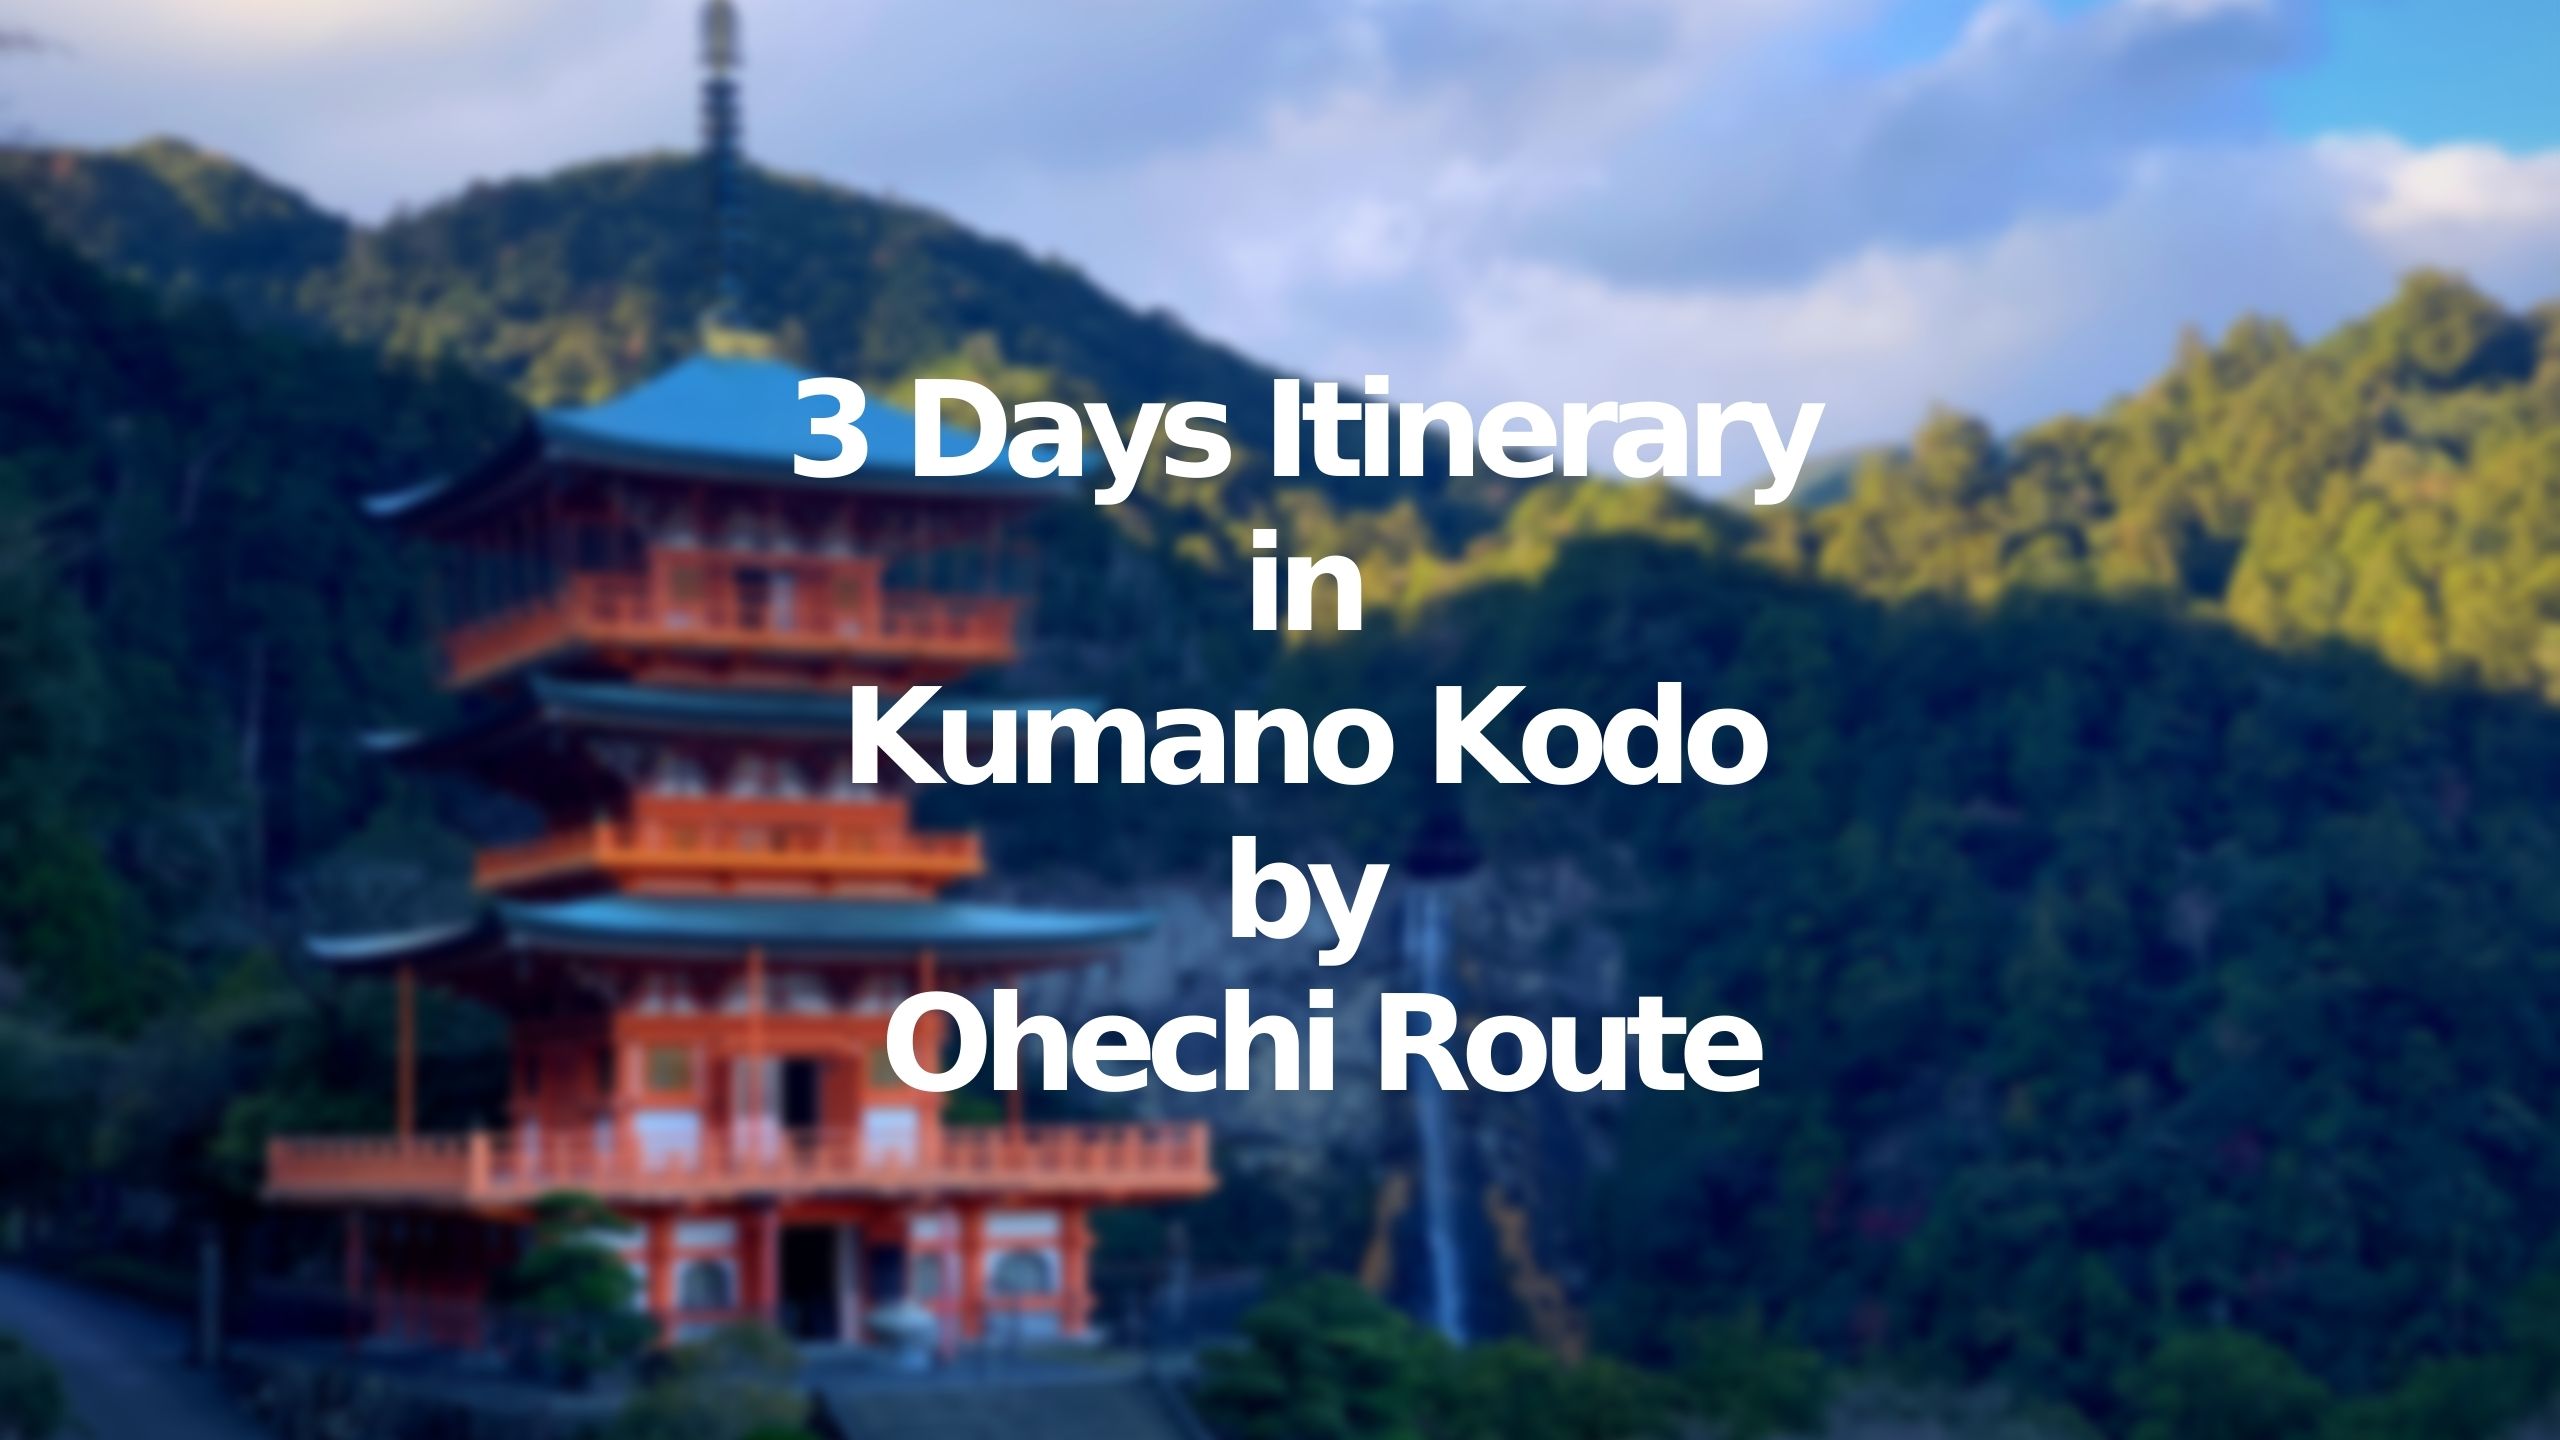 3 Days Itinerary in Kumano Kodo by Ohechi Route